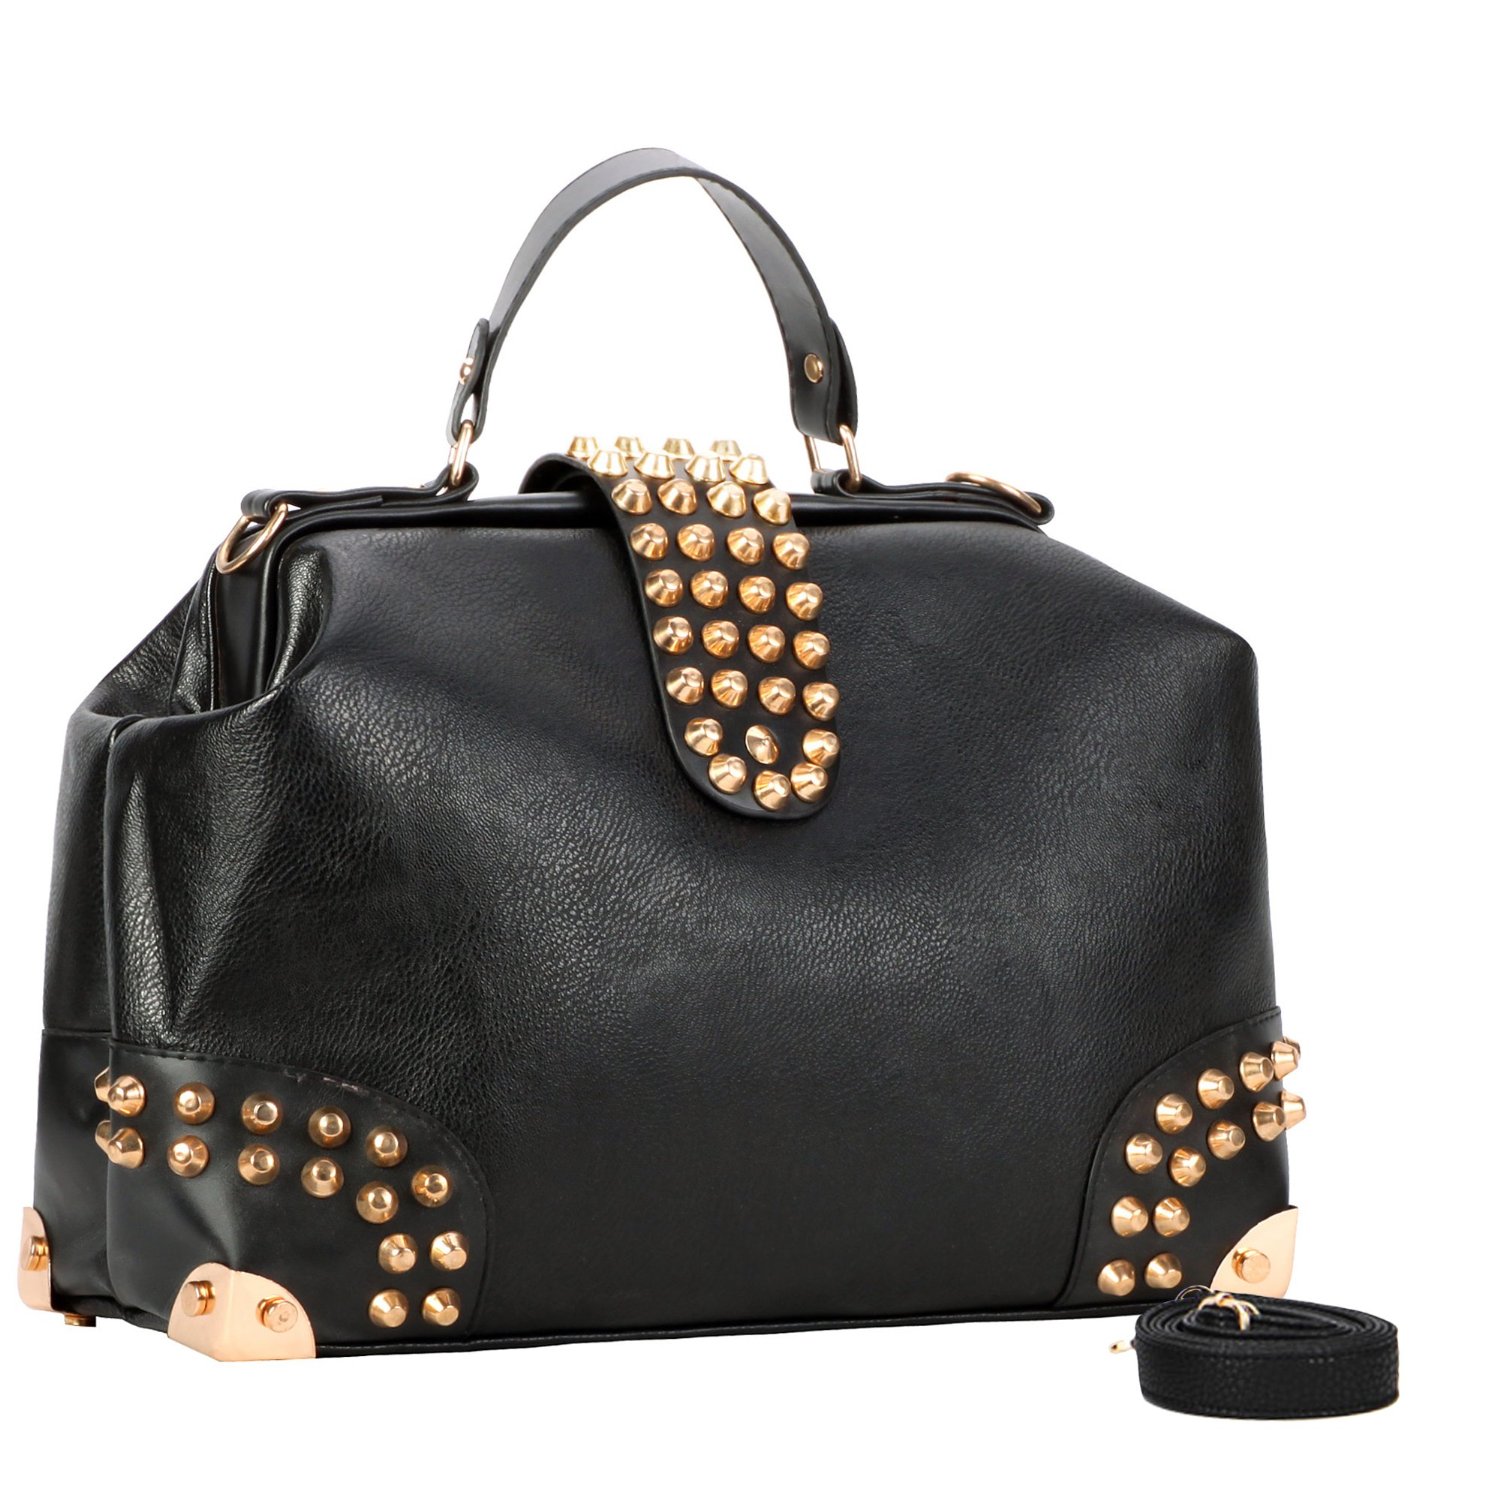 MG Gothic Black Gold handbag - My Bag Collection